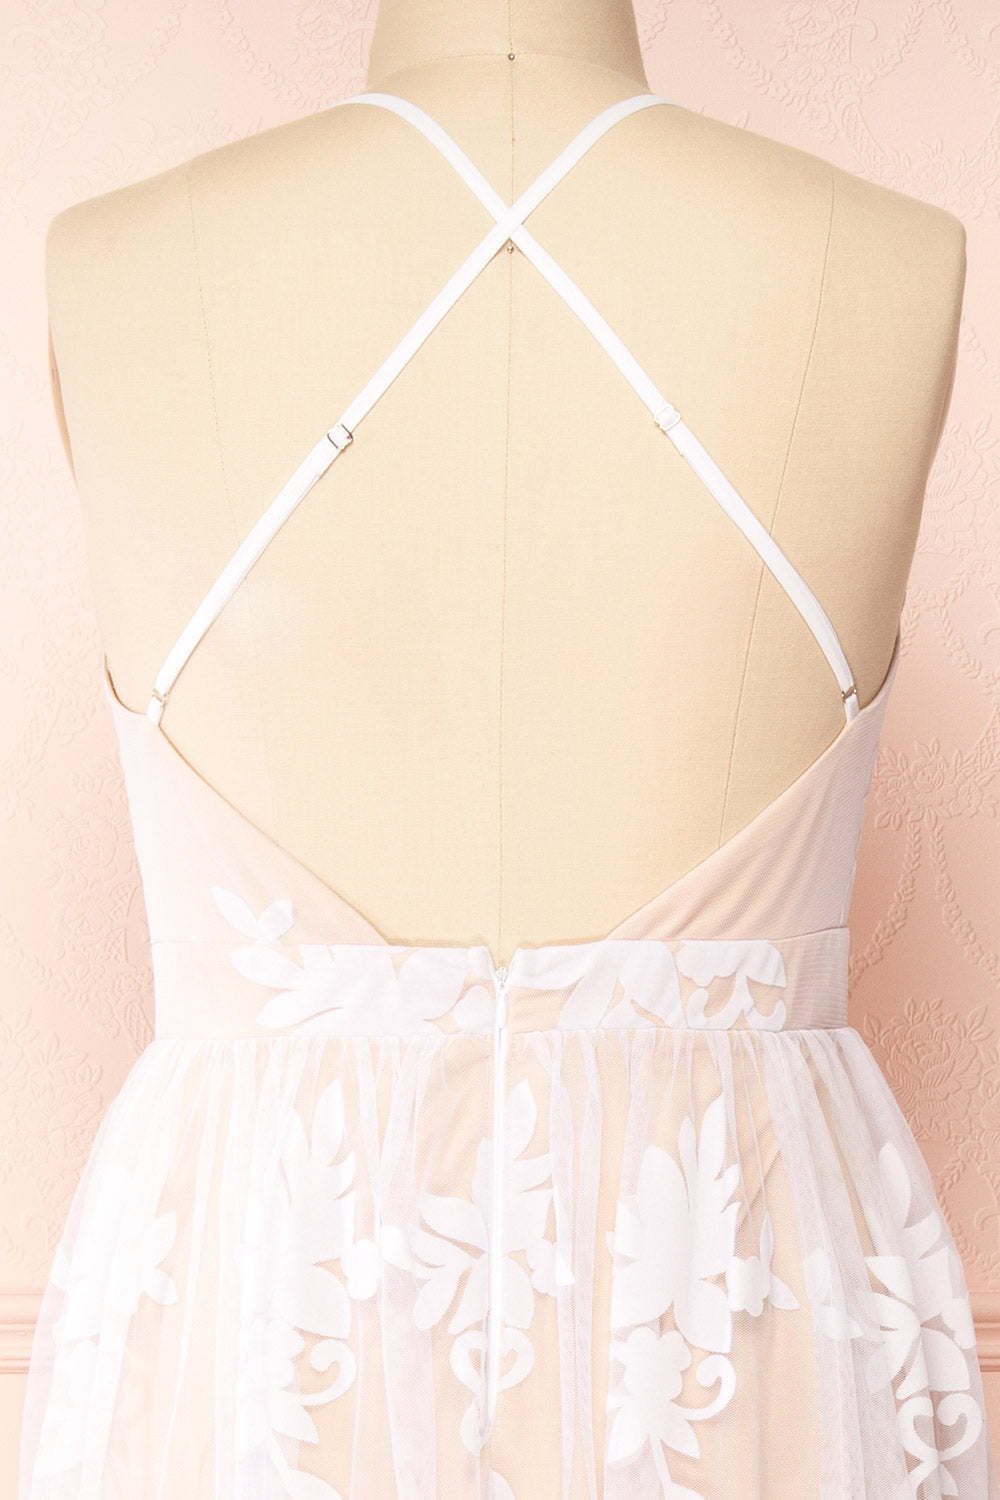 Hyade Beige Plus Size V-Neck Floral Maxi Dress | Boutique 1861 back close-up